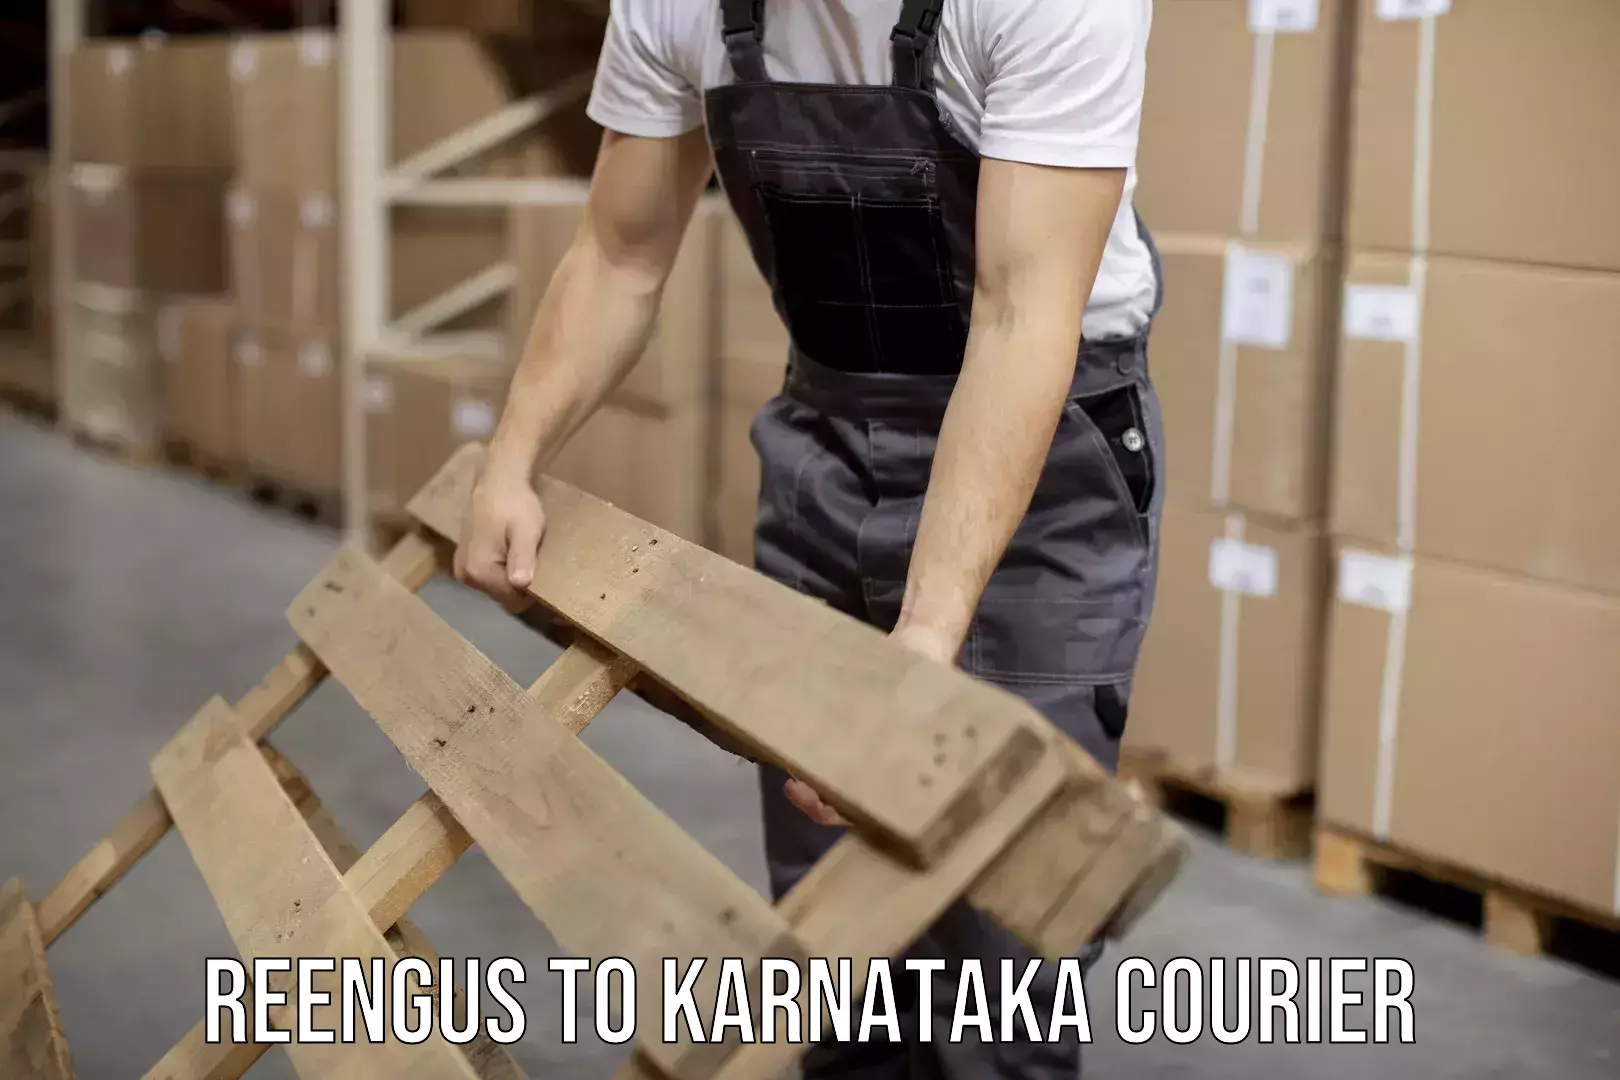 Cargo delivery service Reengus to Karnataka